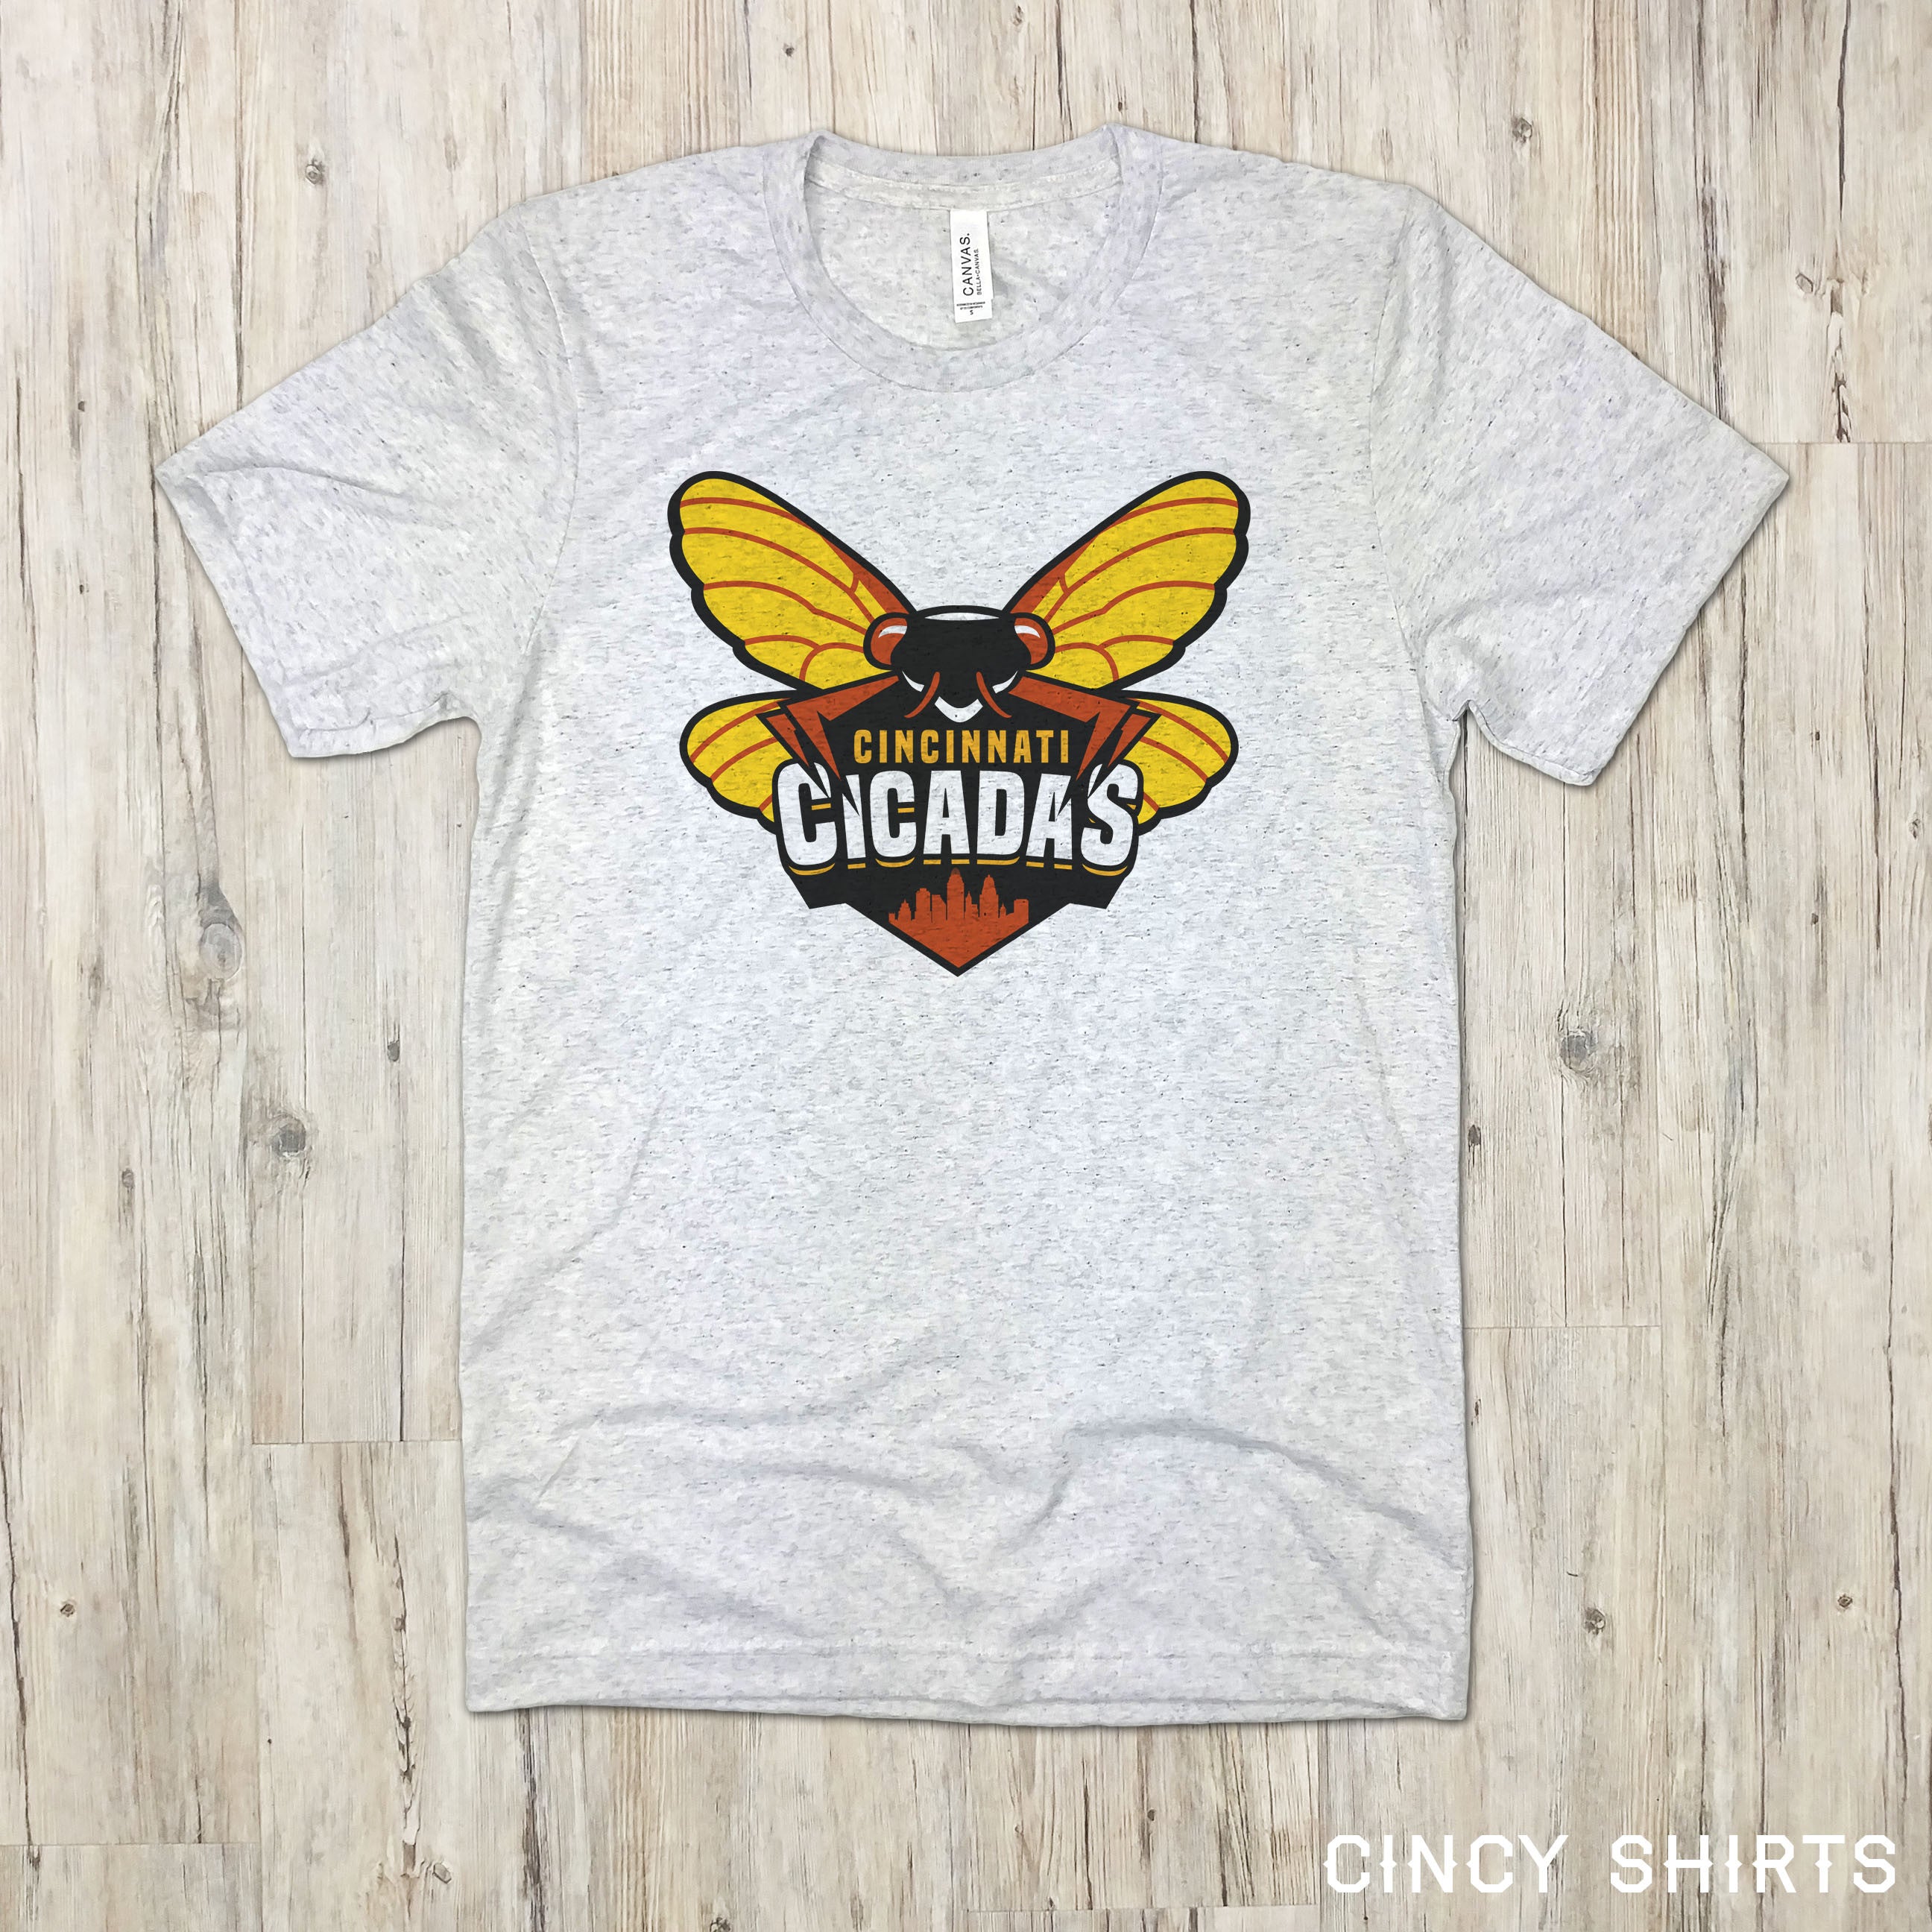 [Image: Cincinnati_Cicadas_Tee_Cincy_Shirts.jpg?v=1495050572]